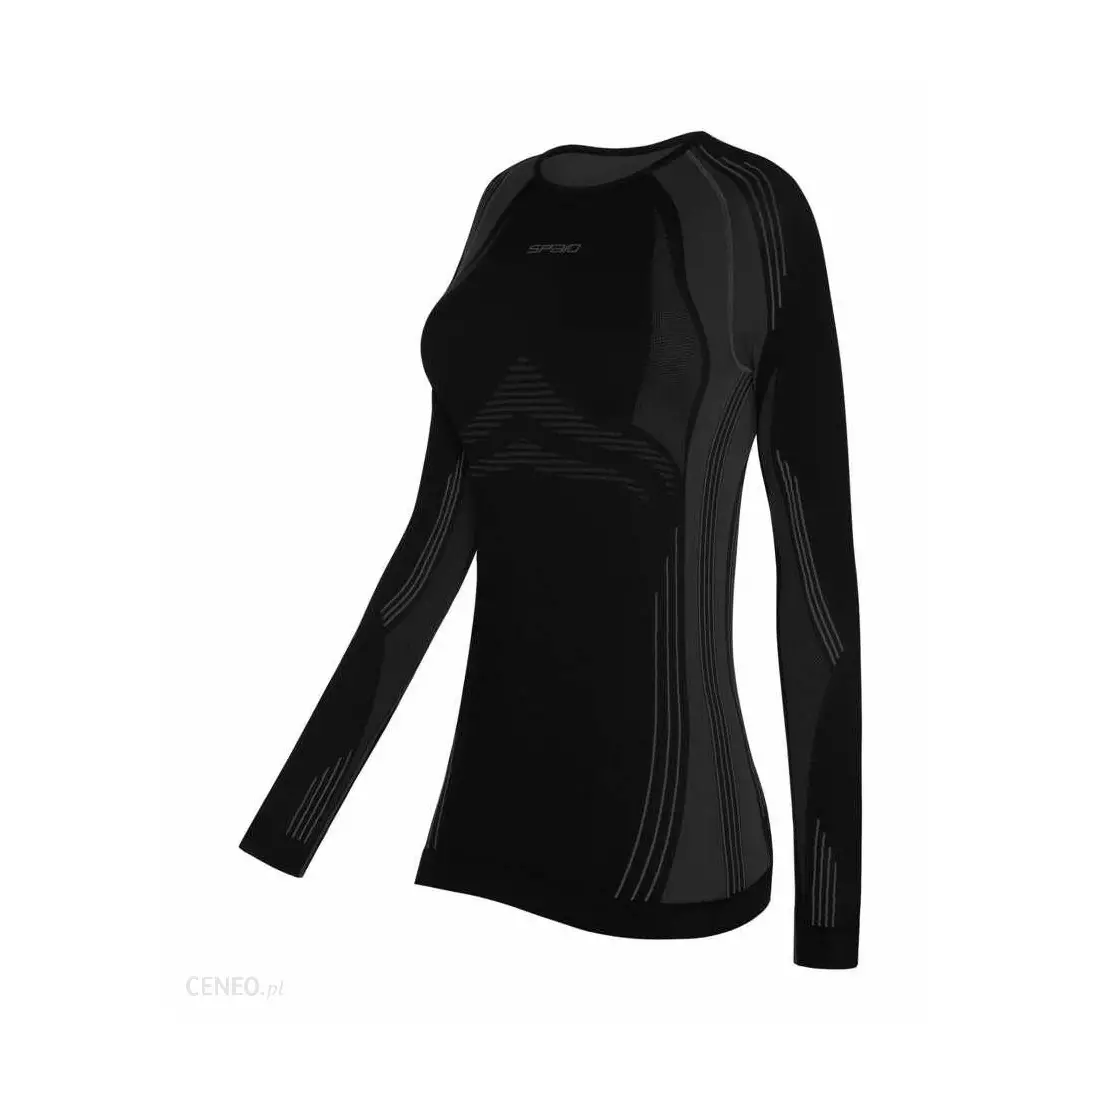 SPAIO base layer ladies thermal underwear jersey POWERFUL black/grey